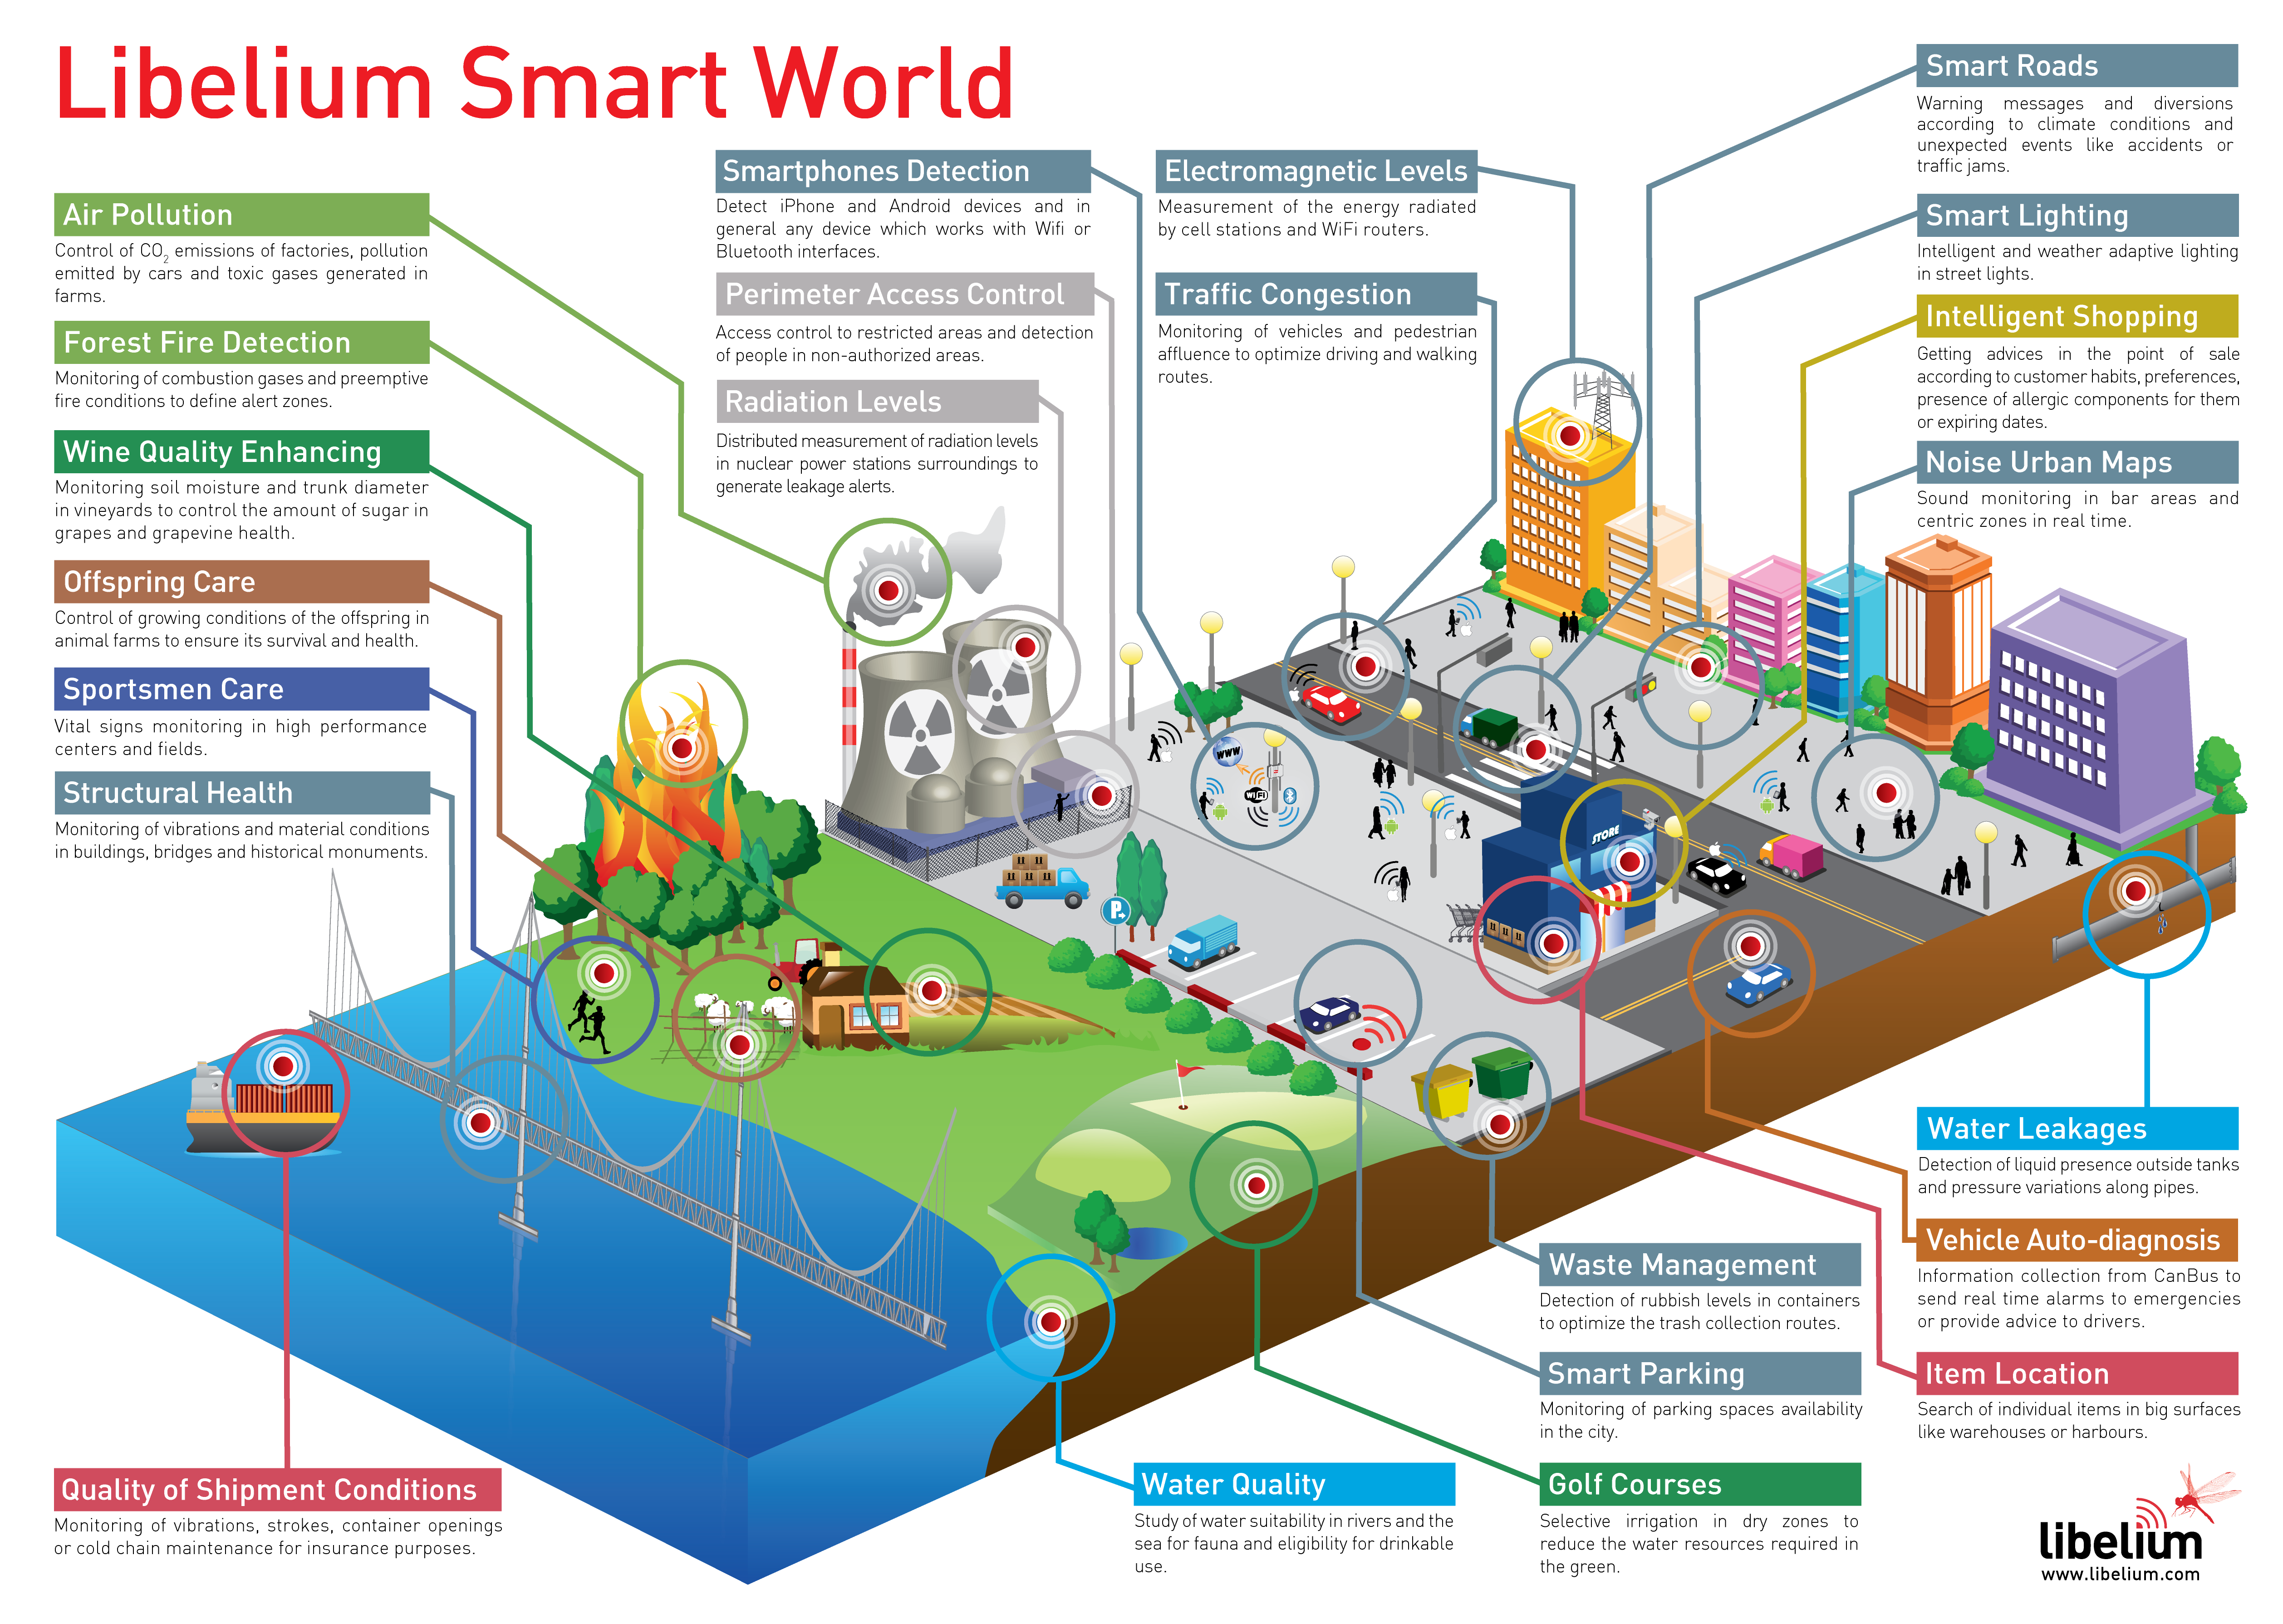 Pic_1 - libelium_smart_world_infographic_big